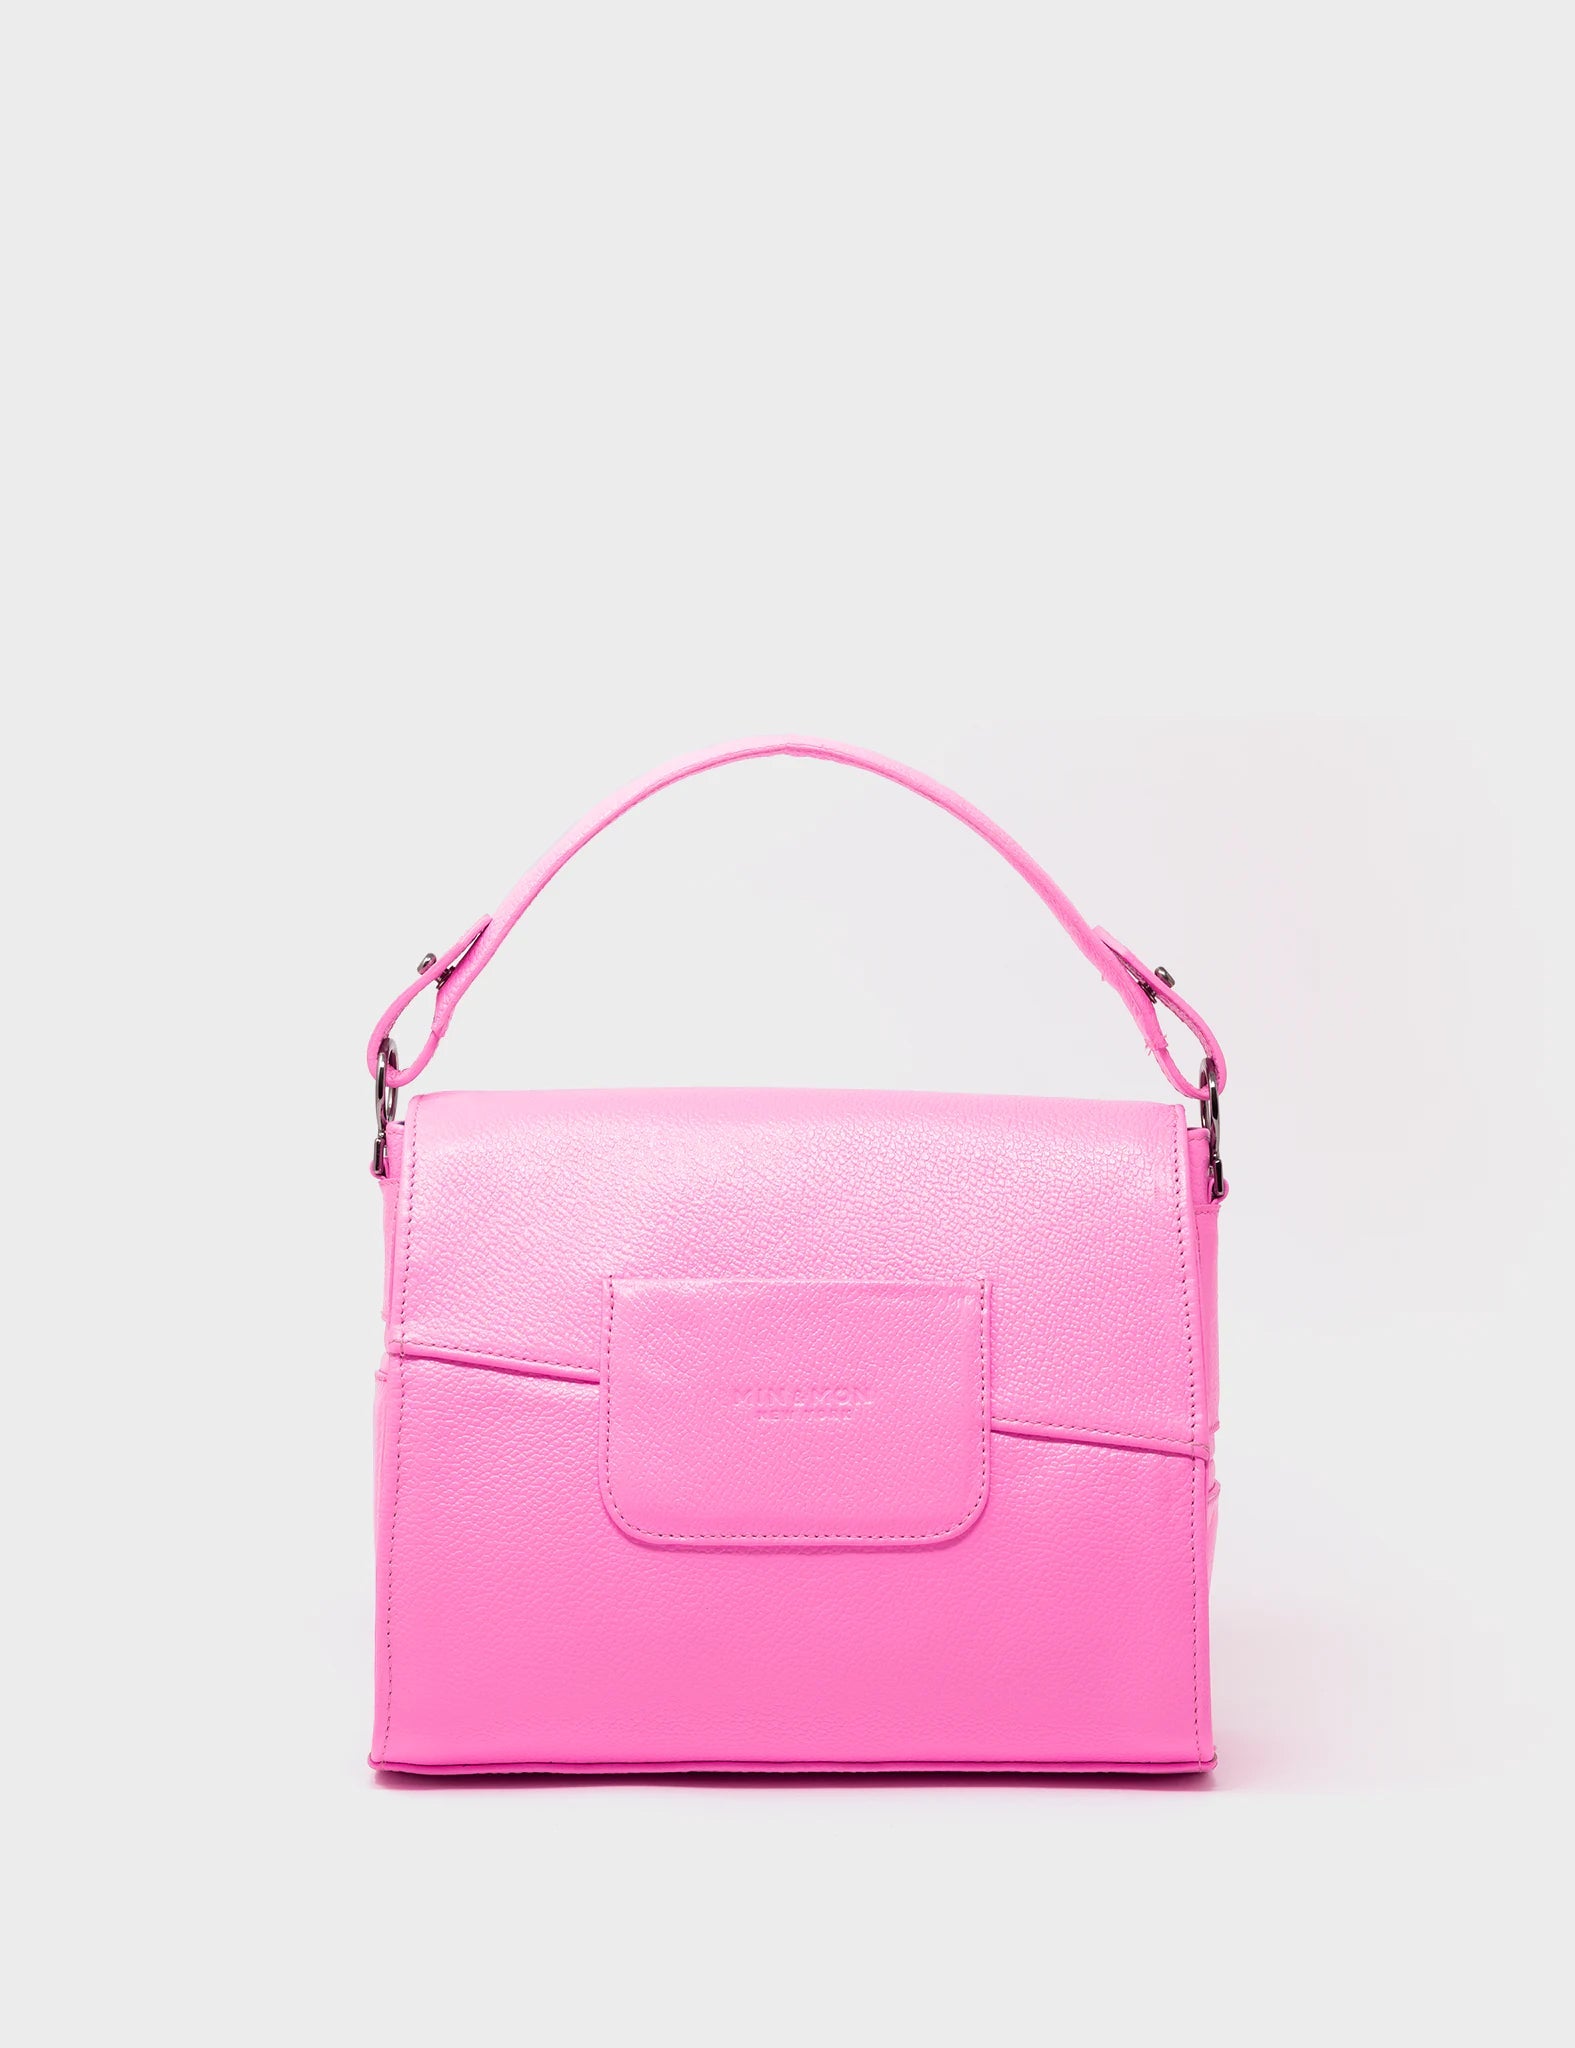 Anastasio Mini Crossbody Handbag Bubblegum Pink Leather - All Over Eyes Embroidery - Back view